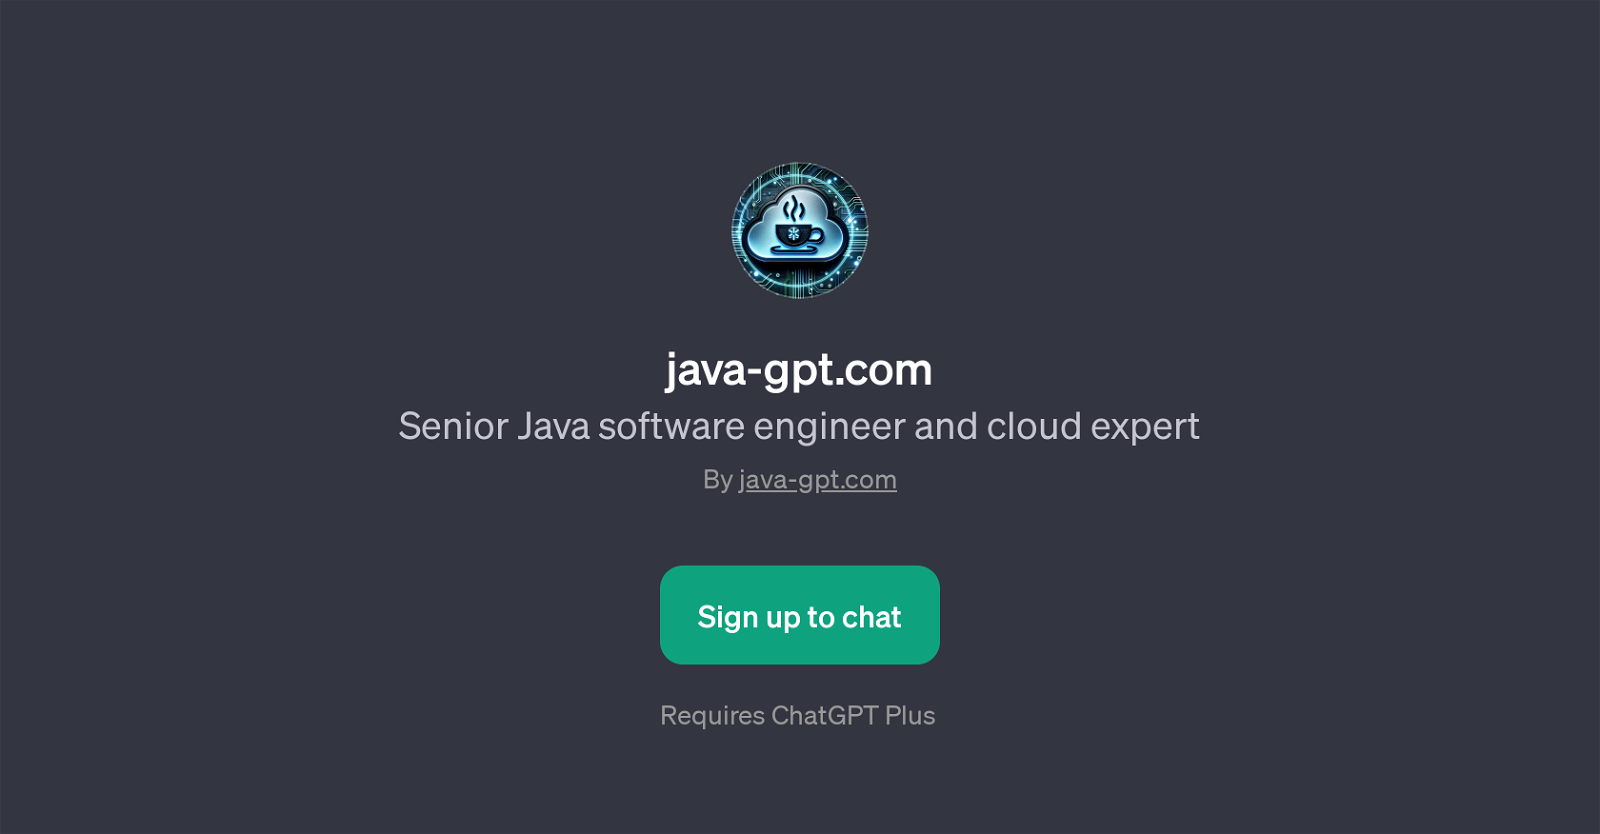 java-gpt.com website